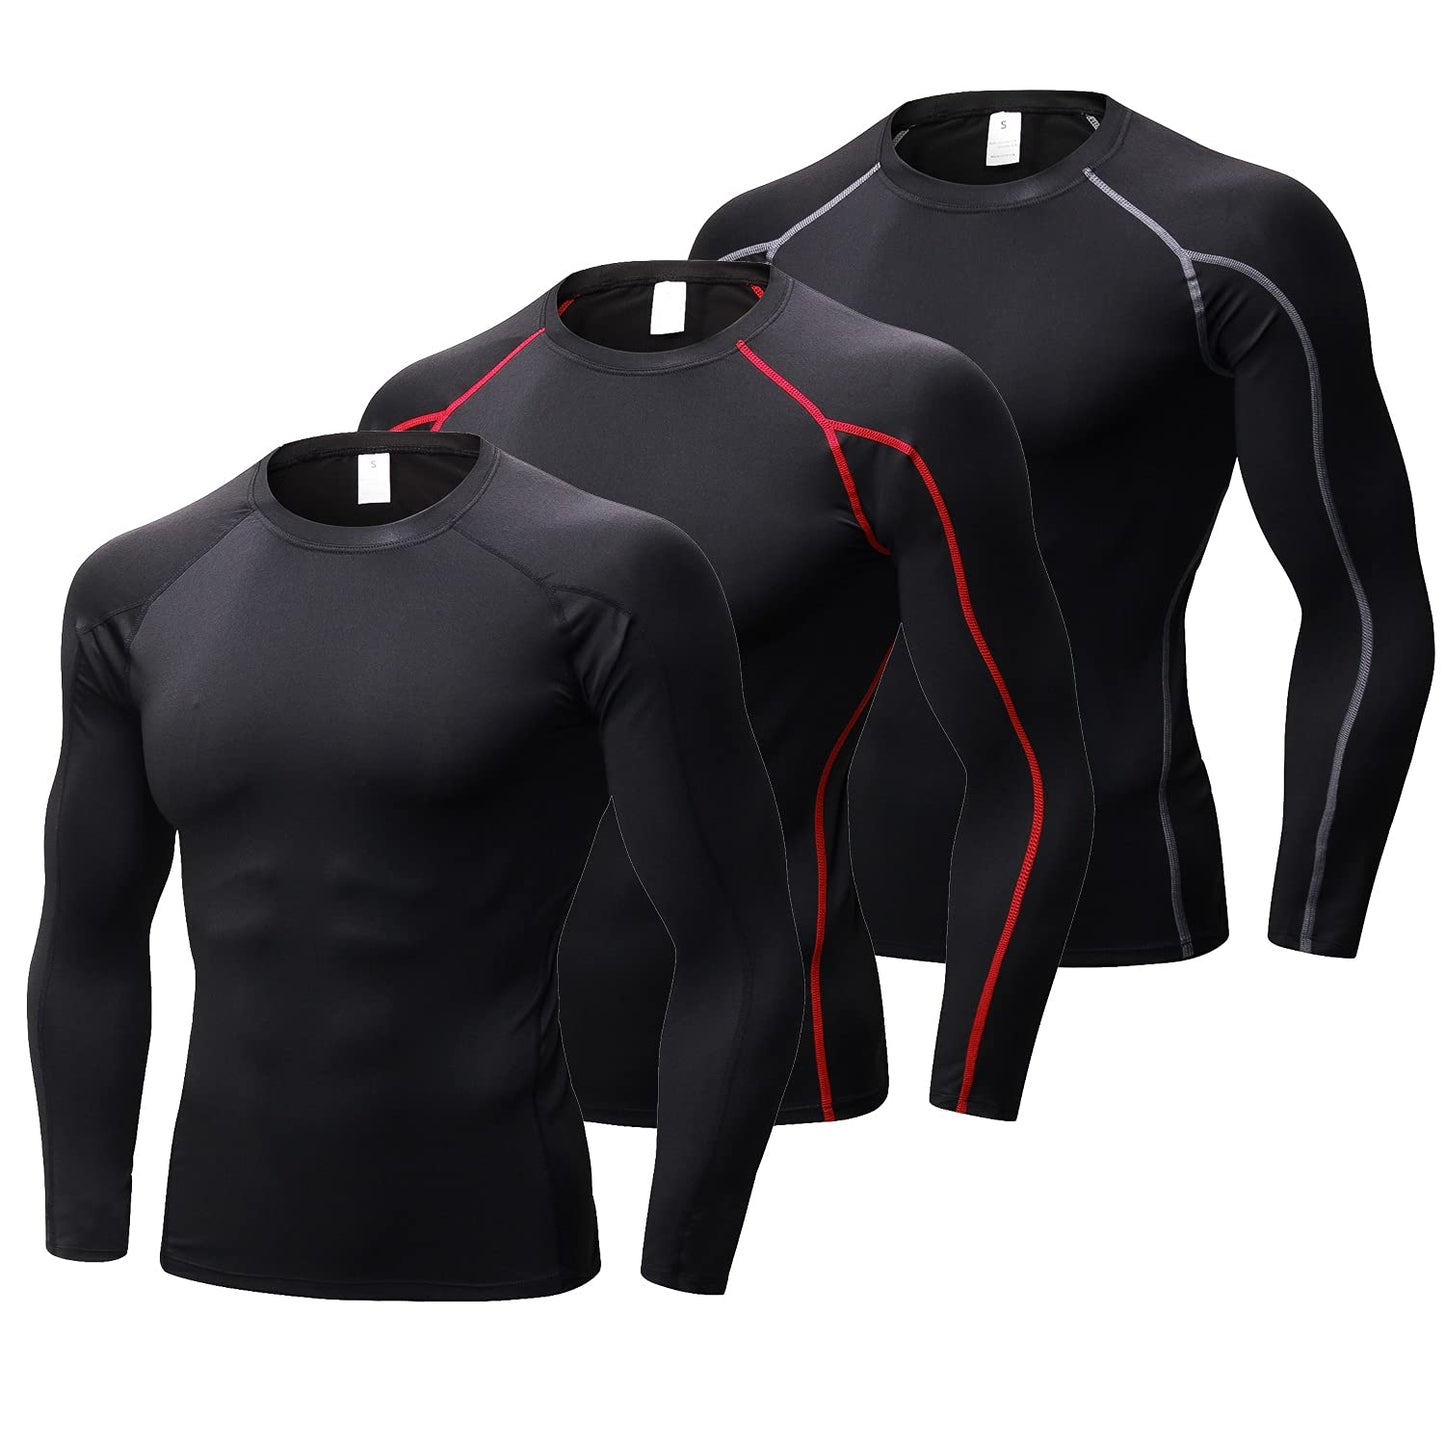 LANBAOSI 3 Pack/2Pack Mens Mock Turtleneck Compression Shirts Long Sleeve  Sun Protection Shirts Cooling Workout Gym Tops Undershirt - ShopStyle T- shirts